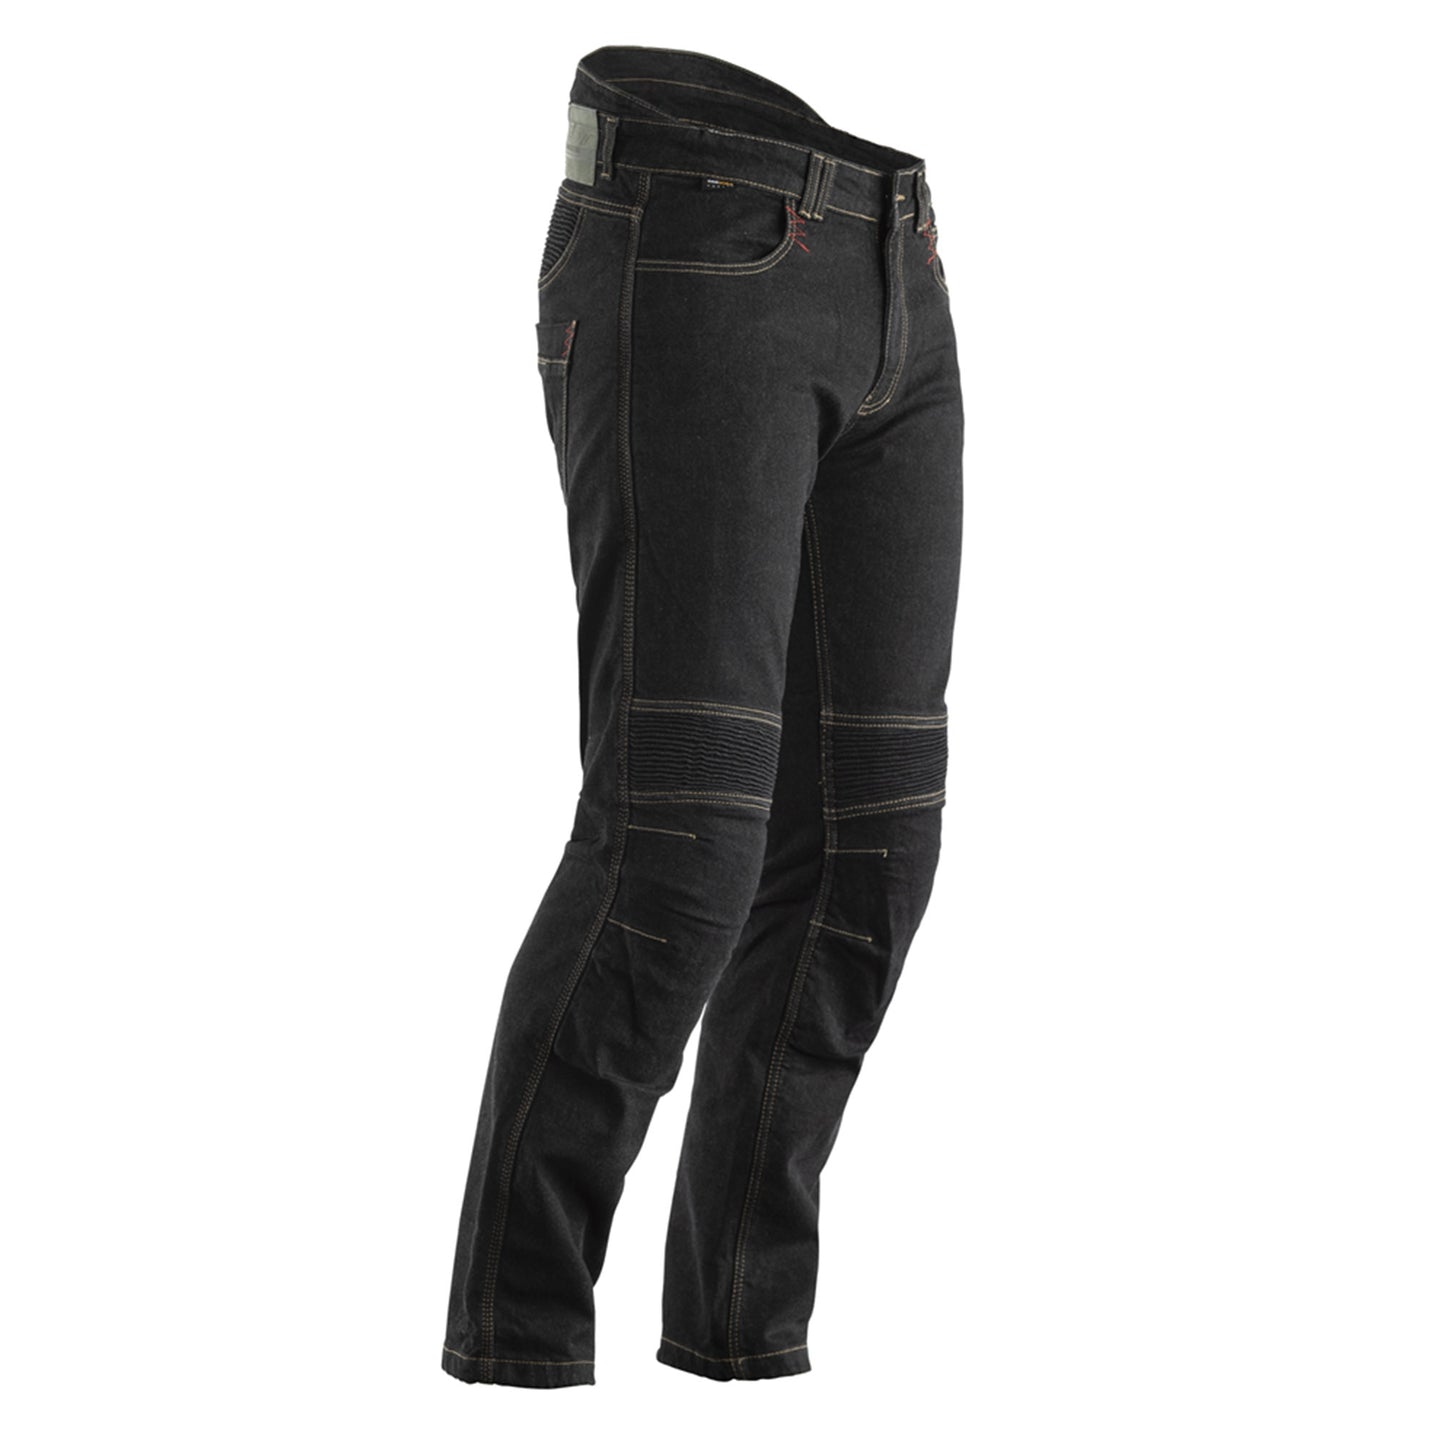 RST Reinforced Tech Pro CE Men's Denim Jeans - Includes Knee and Hip Armour - Short Length - Black